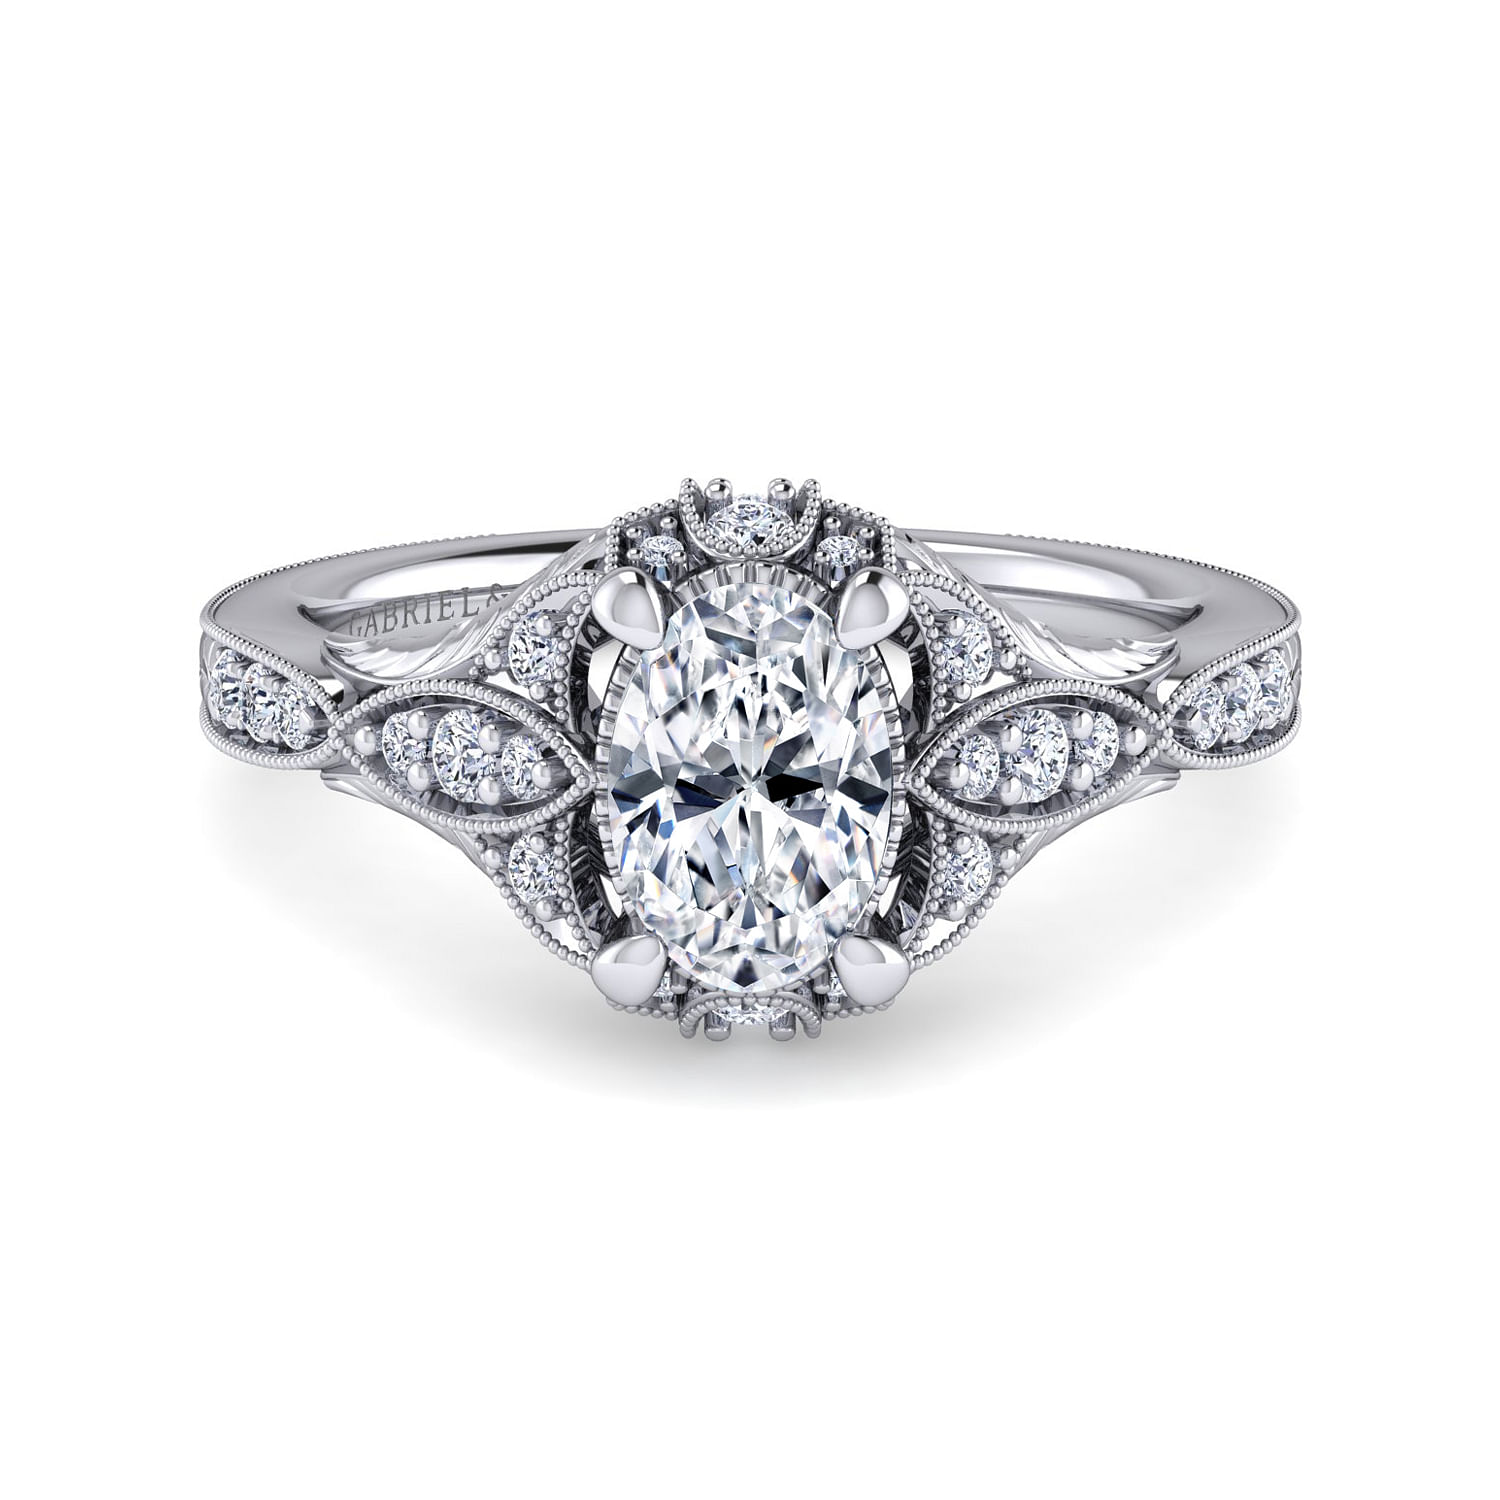 Windsor - Unique 14K White Gold Vintage Inspired Oval Halo Diamond Engagement Ring